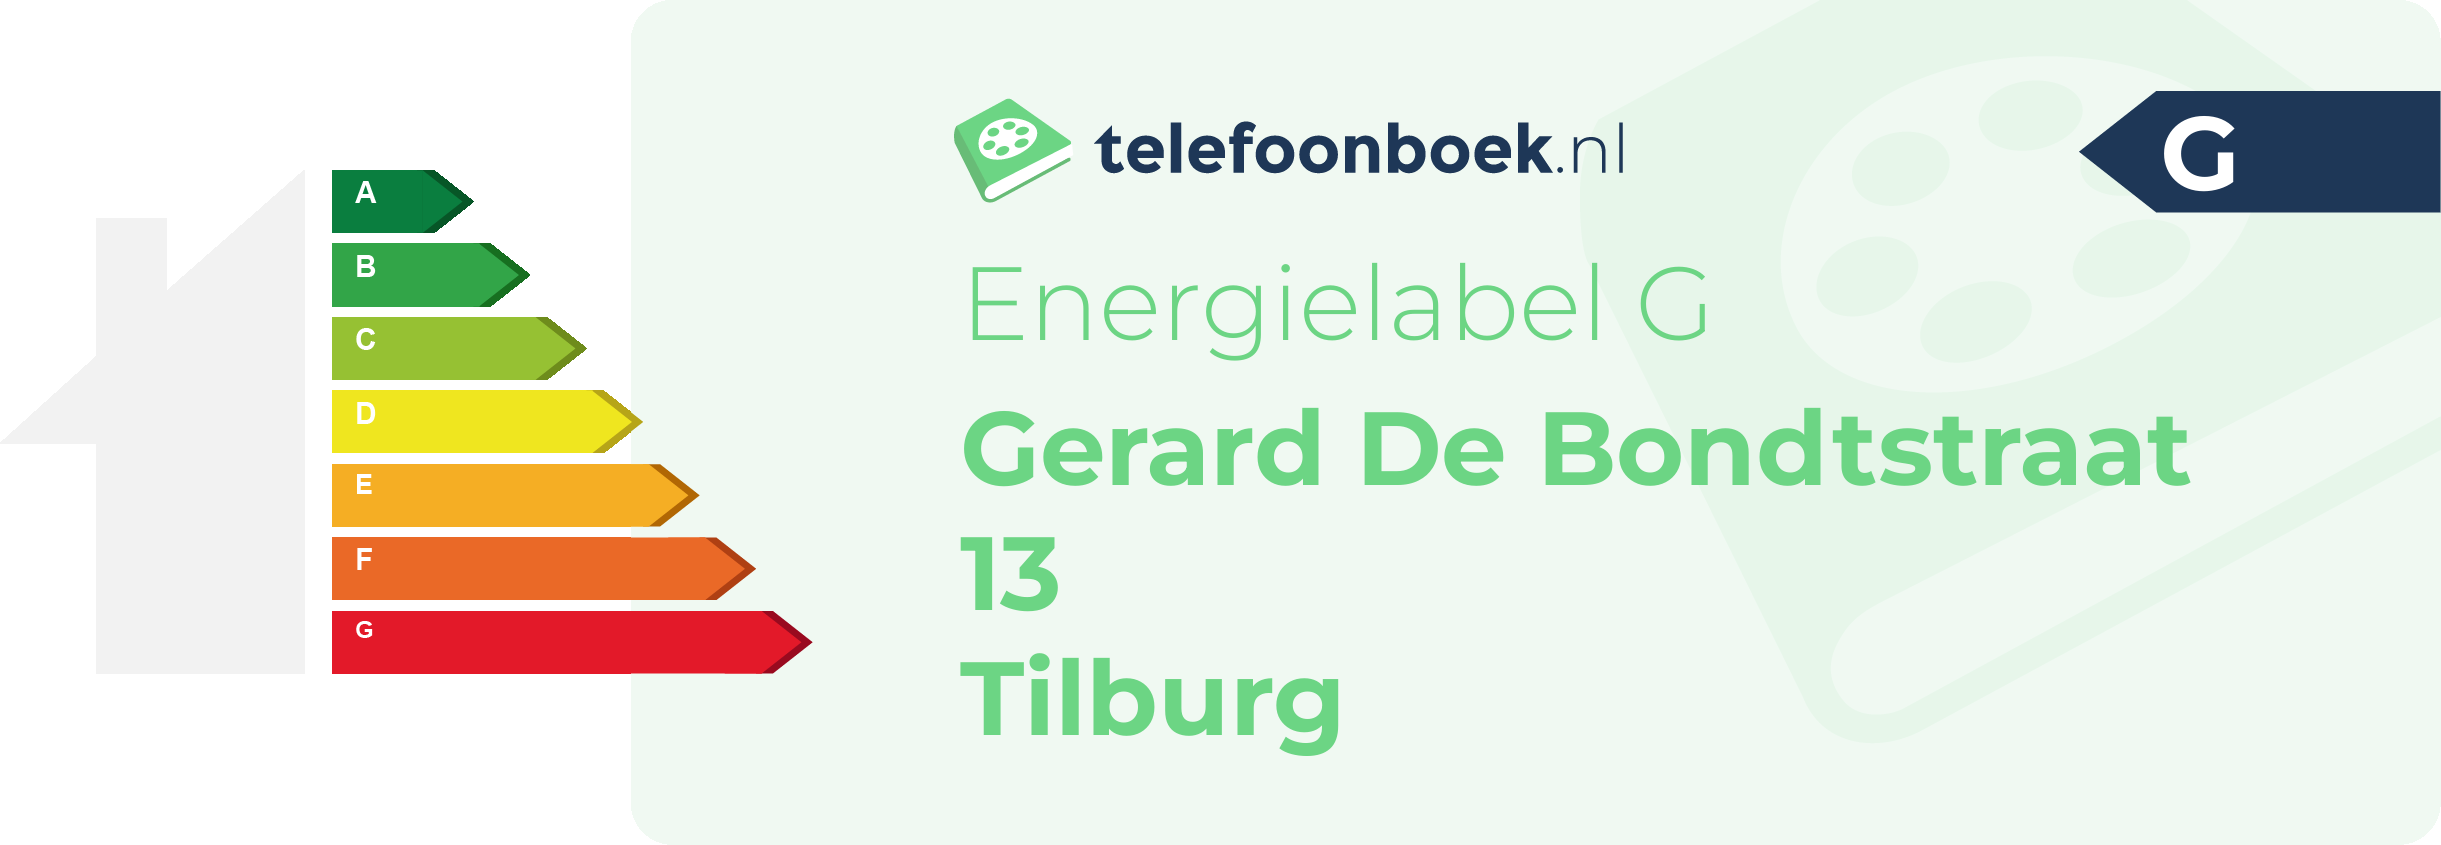 Energielabel Gerard De Bondtstraat 13 Tilburg